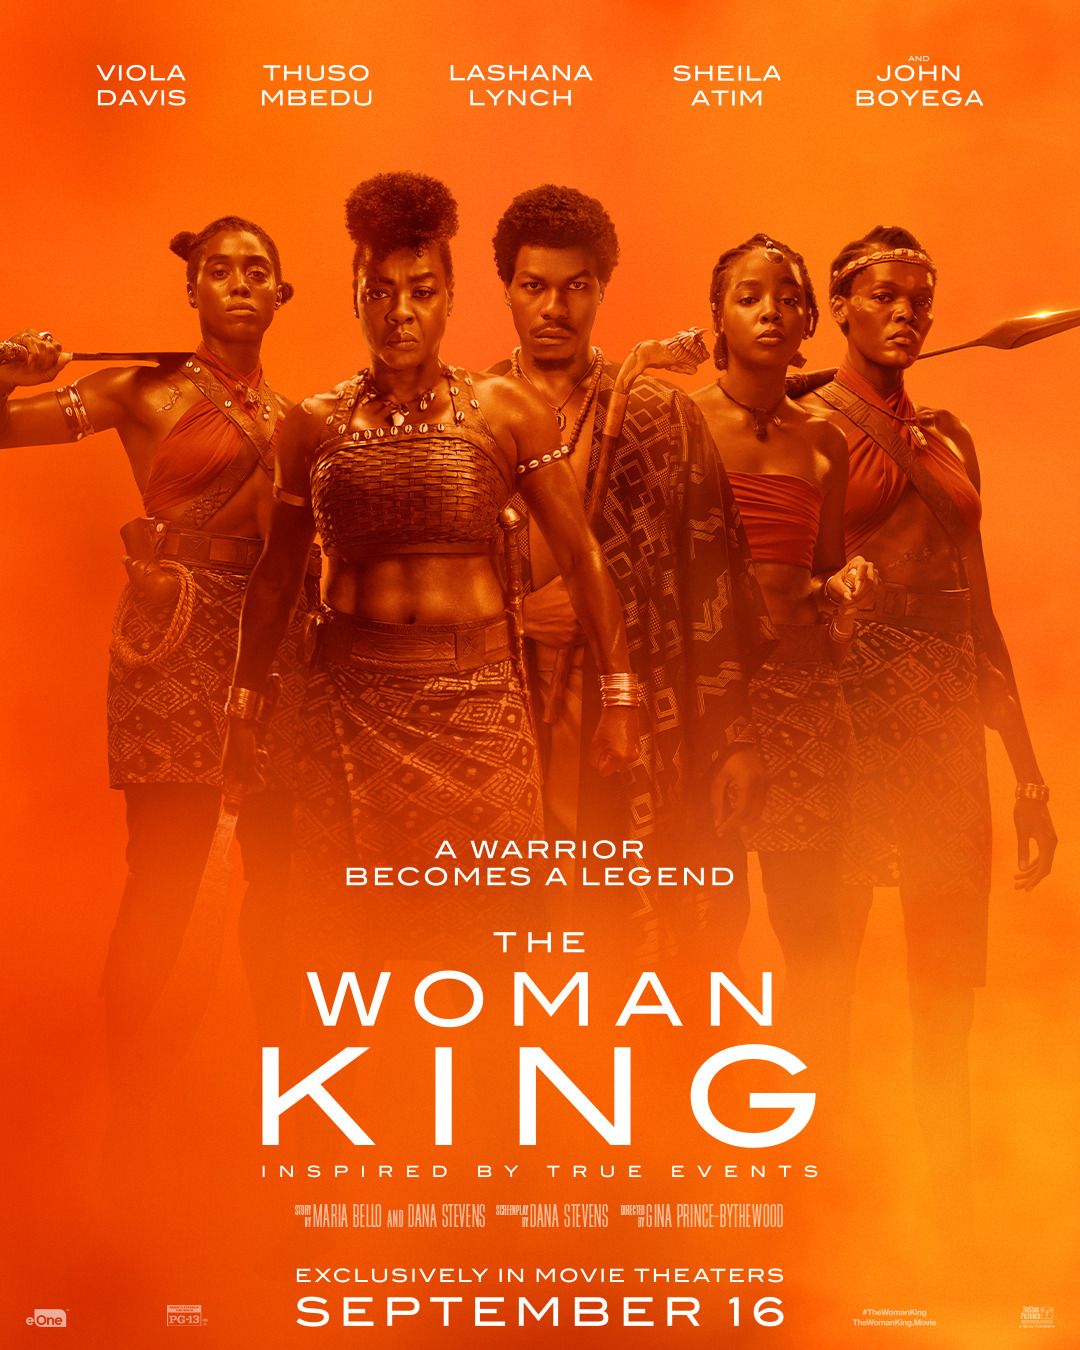 The Woman King (2022) - ตำนานอันทรงพลังแห่งความแข็งแกร่ง การเสียสละ และความกล้าหาญทางประวัติศาสตร์